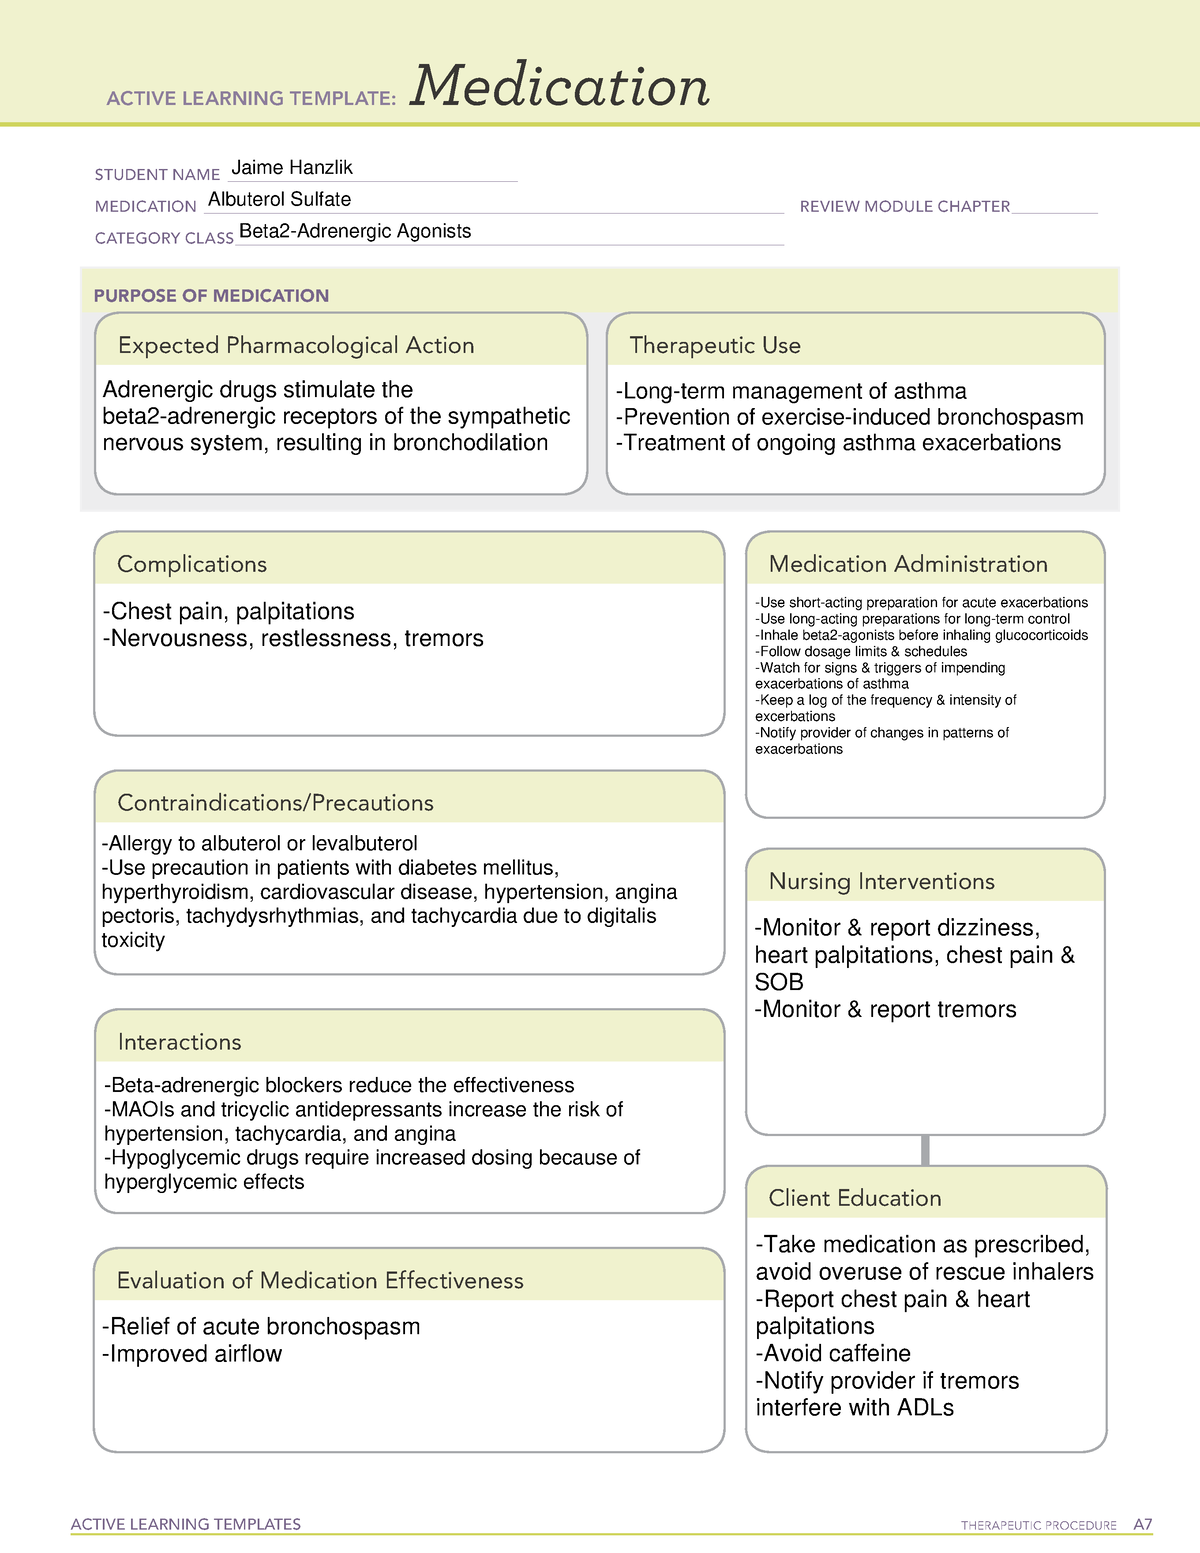 ati-medication-template-albuterol-active-learning-templates-therapeutic-procedure-a-medication